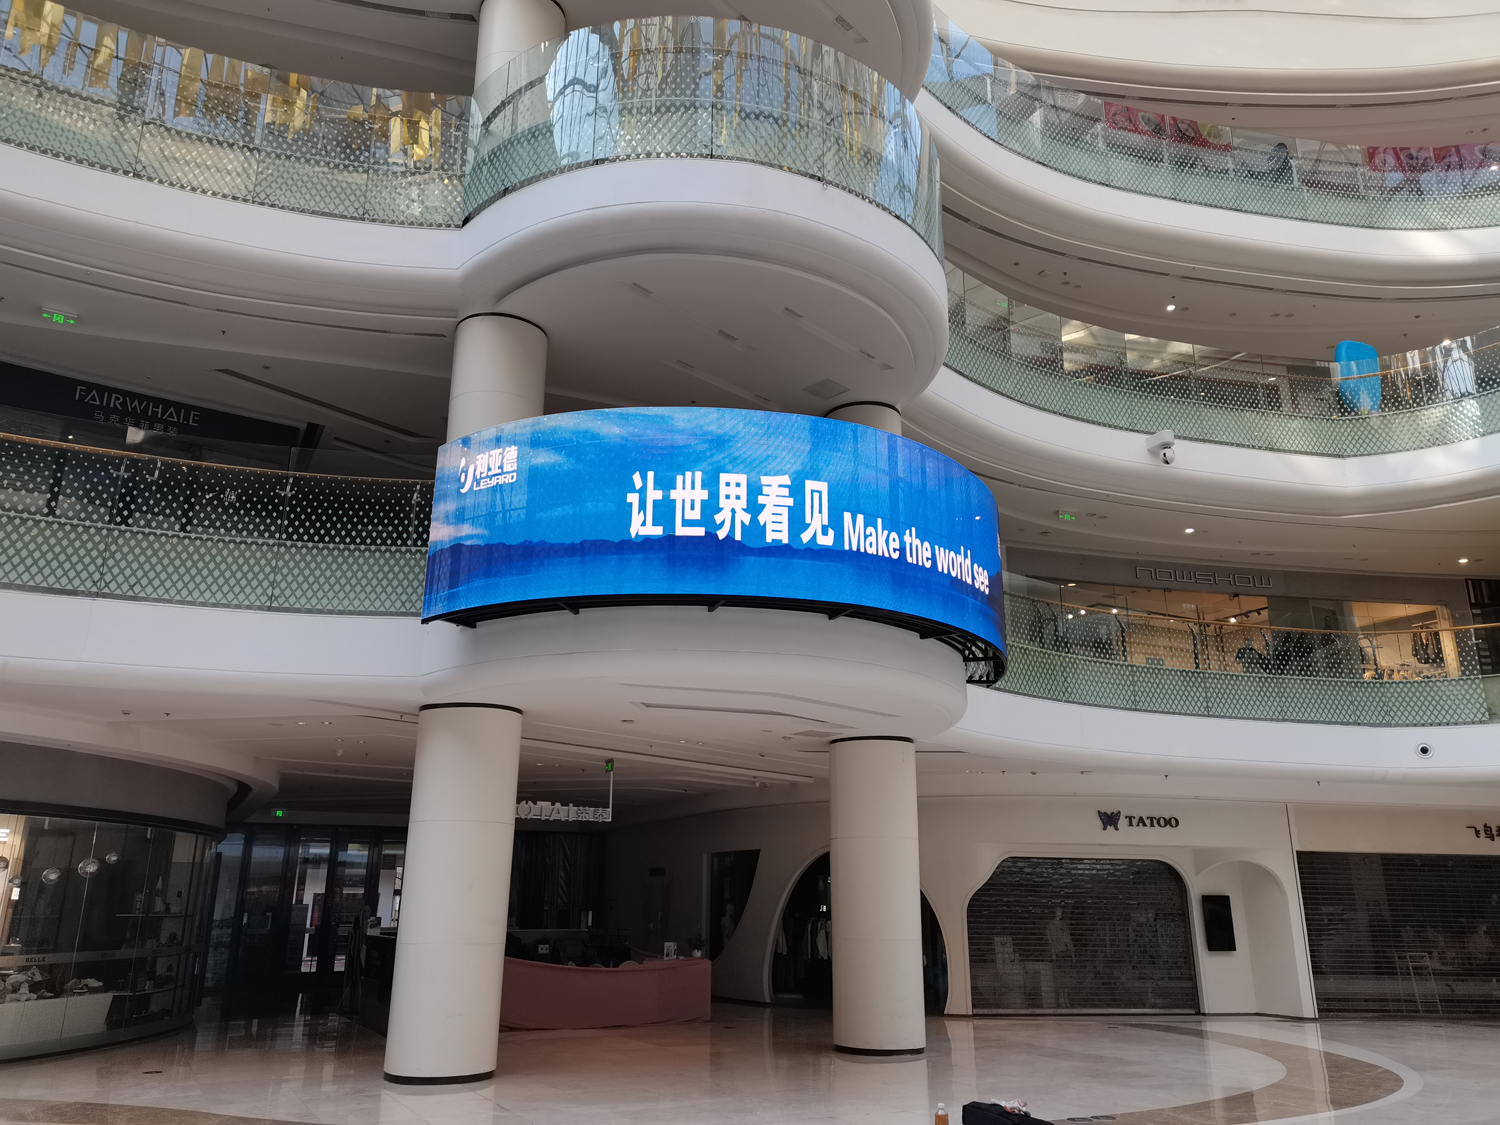 Indoor transparent screen of a commercial plaza in Jiangsu